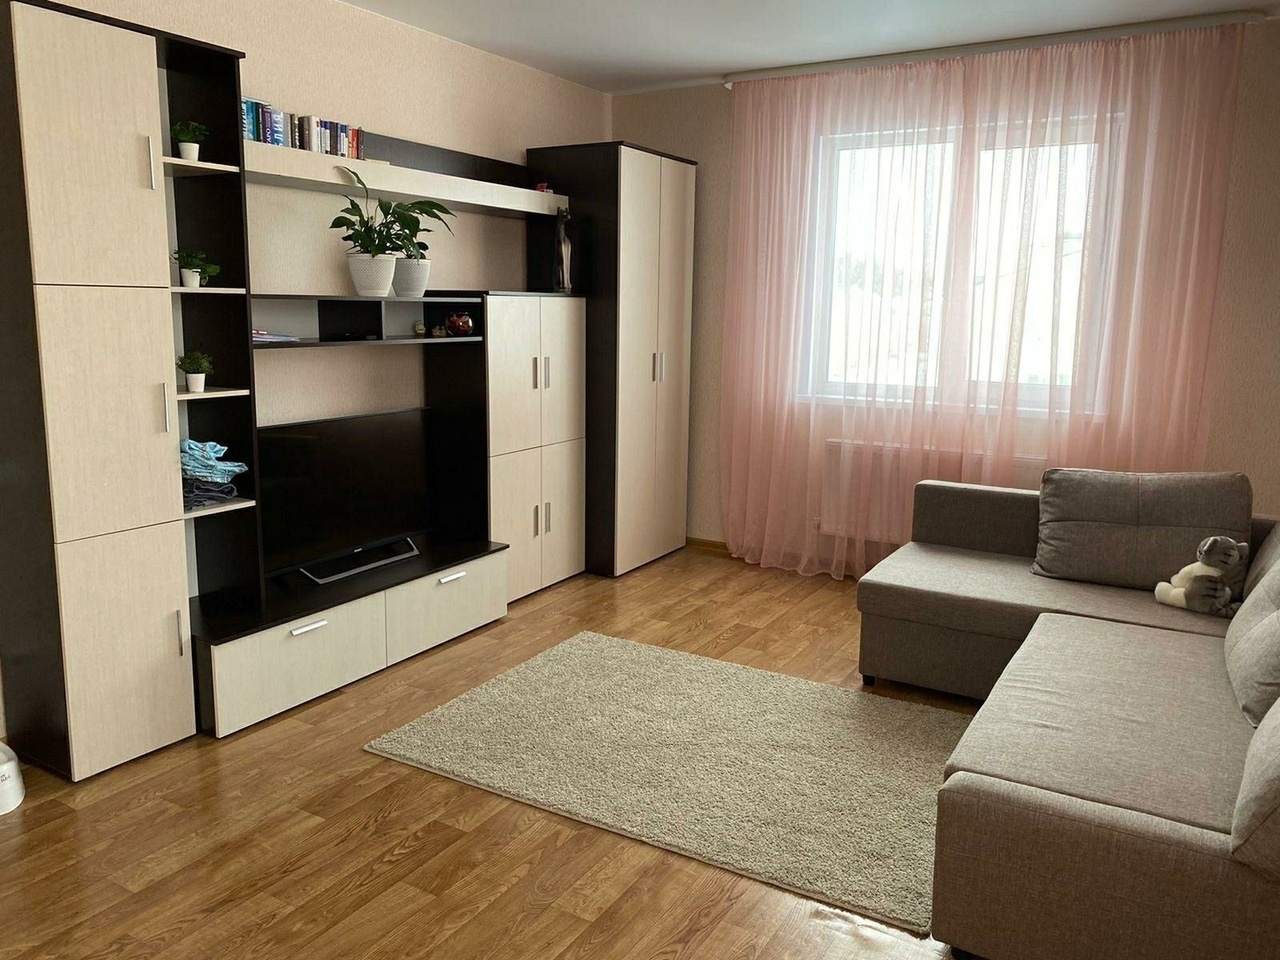 Снять 2 комнатную квартиру без мебели